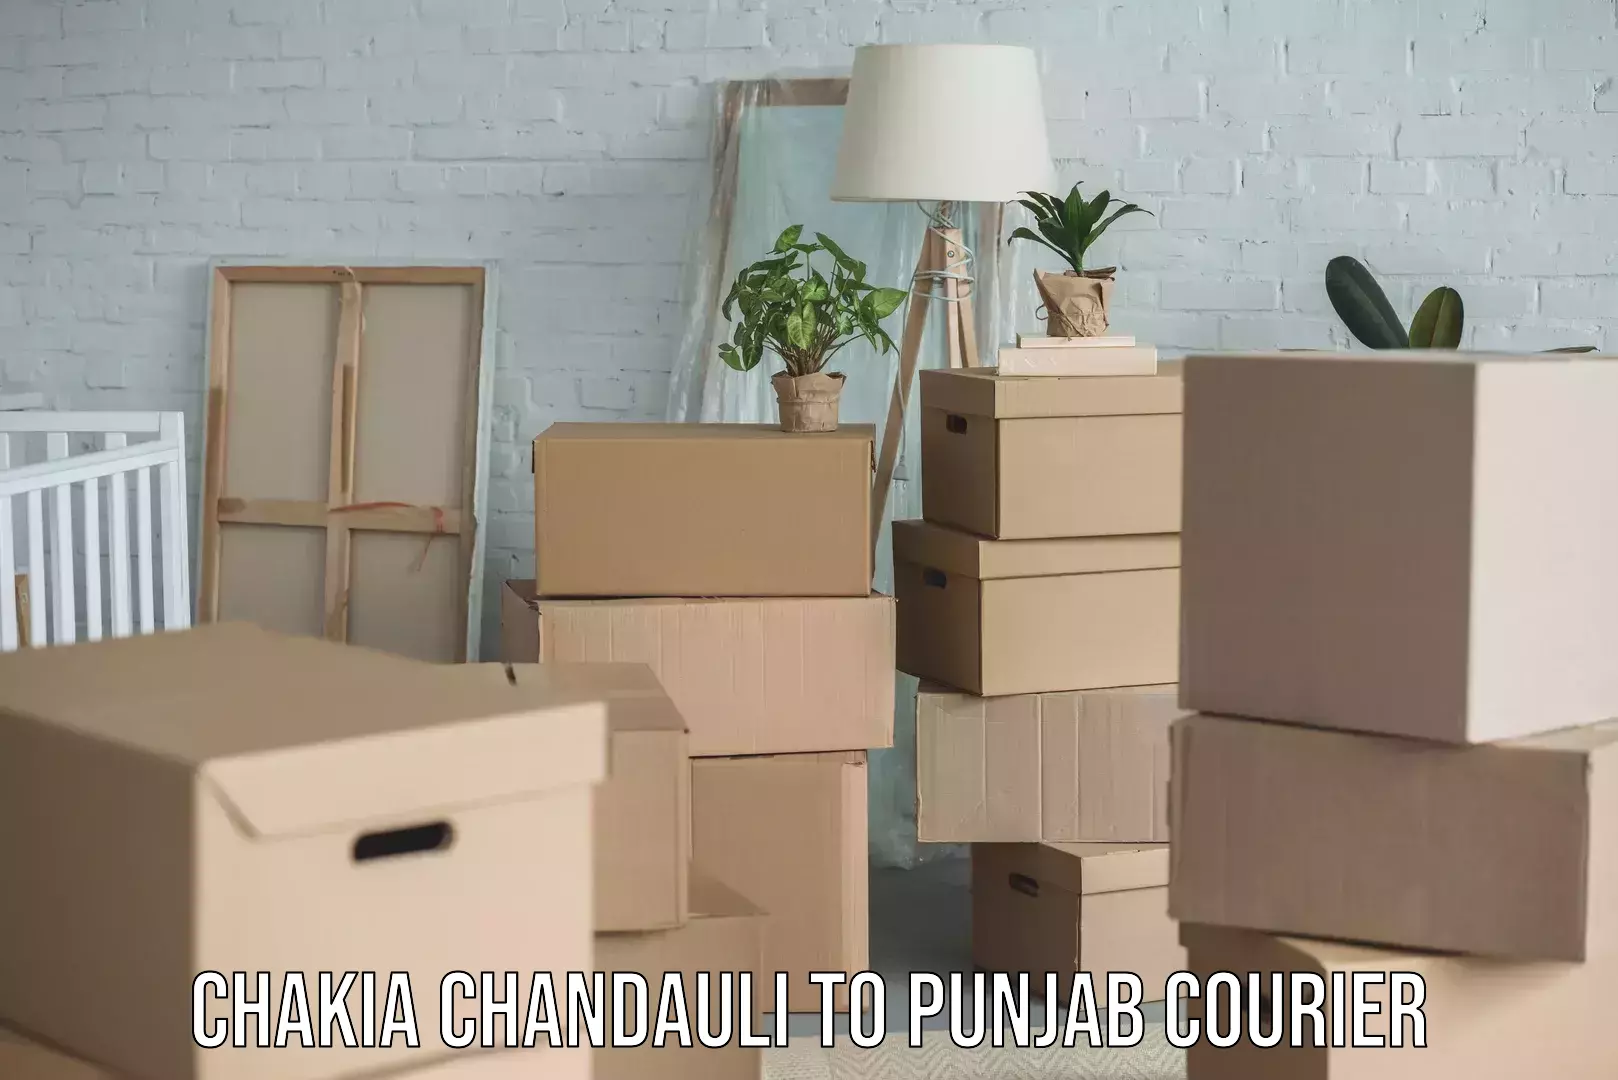 On-call courier service Chakia Chandauli to Punjab